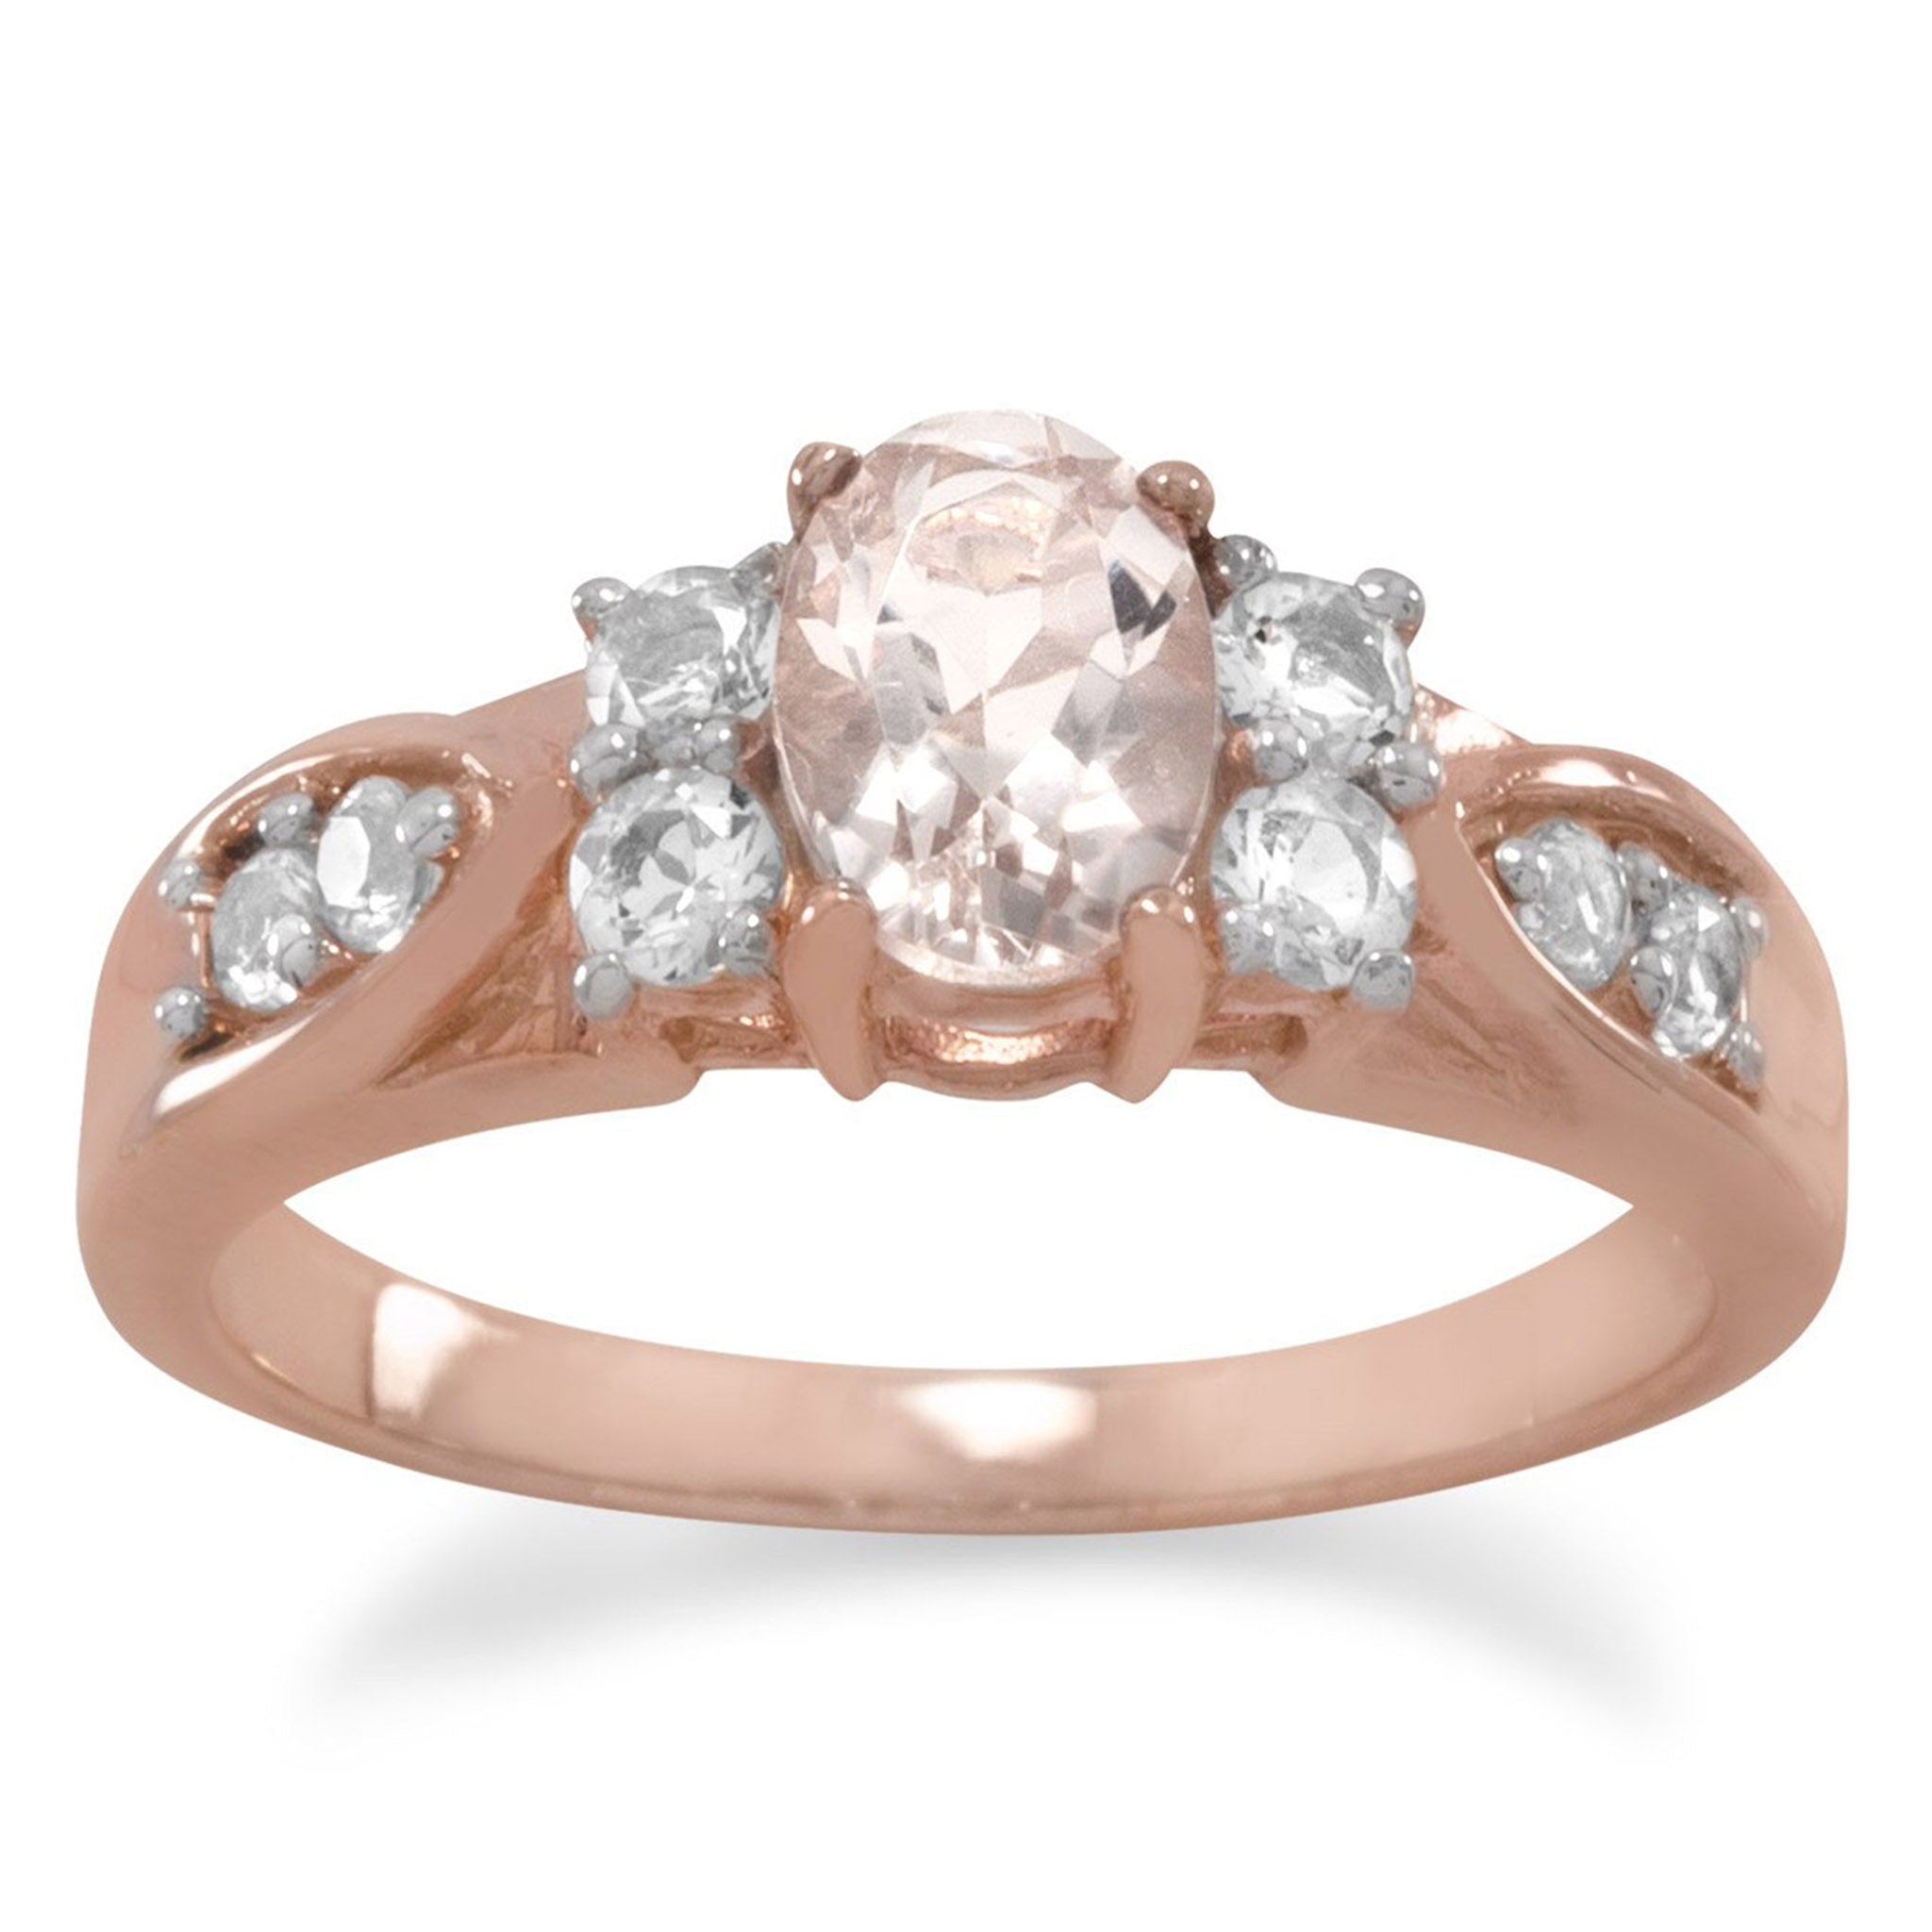 Buy Takshila Gems® Natural White Topaz Ring Lab Certified Adjustable Ring  in Silver 925 for Men & Women White Topaz Stone Ring (10 Ratti / 9 Carat)  at Amazon.in